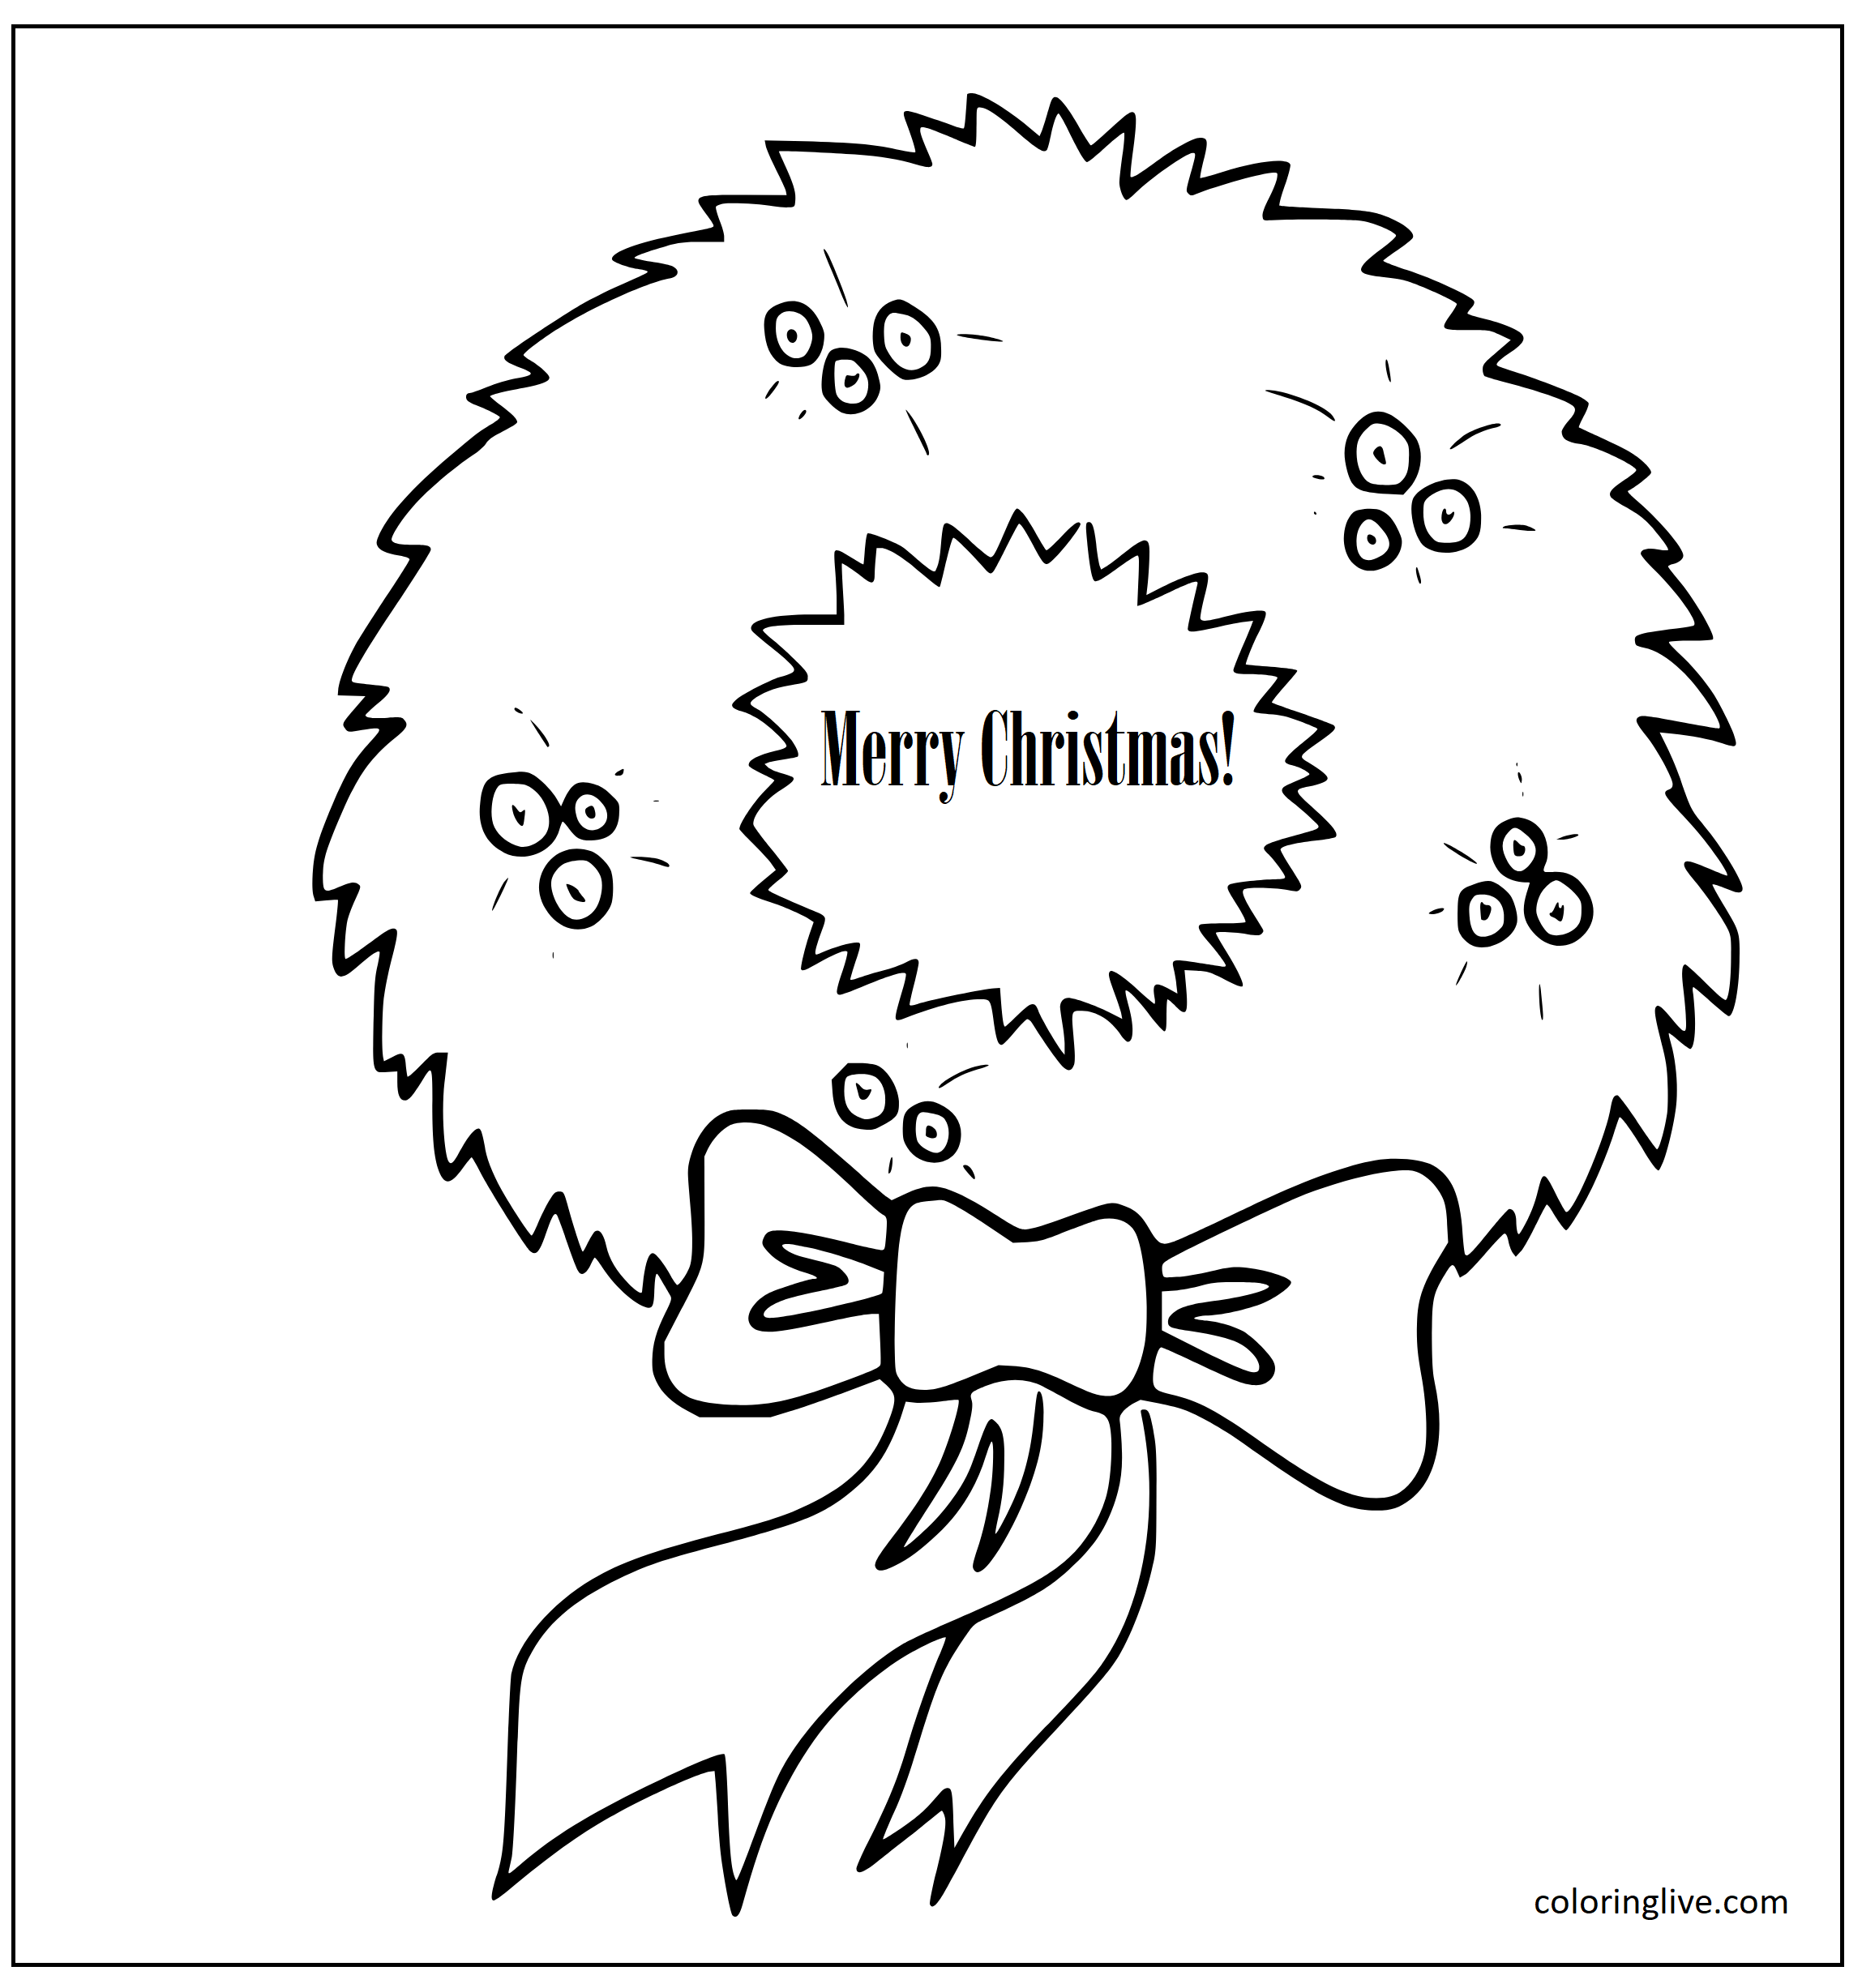 Printable Christmas Wreath with Christmas Celebration Coloring Page for kids.